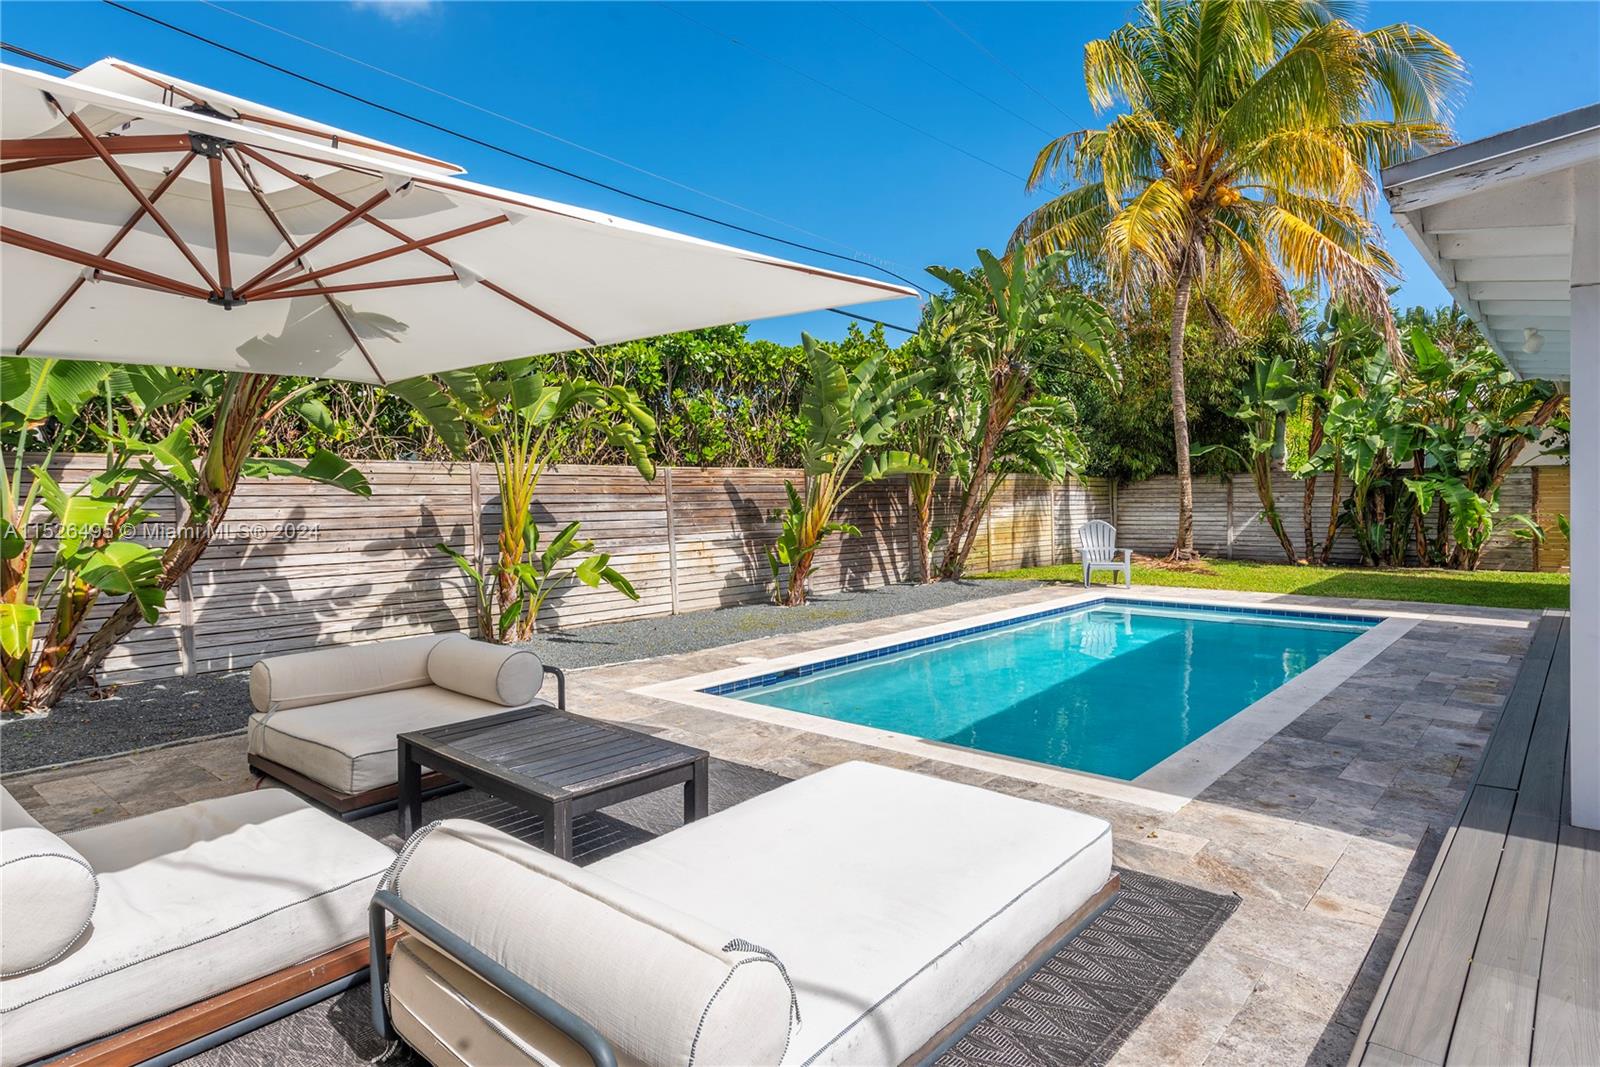 Property for Sale at 655 Ne 50th Ter, Miami, Broward County, Florida - Bedrooms: 4 
Bathrooms: 3  - $2,150,000